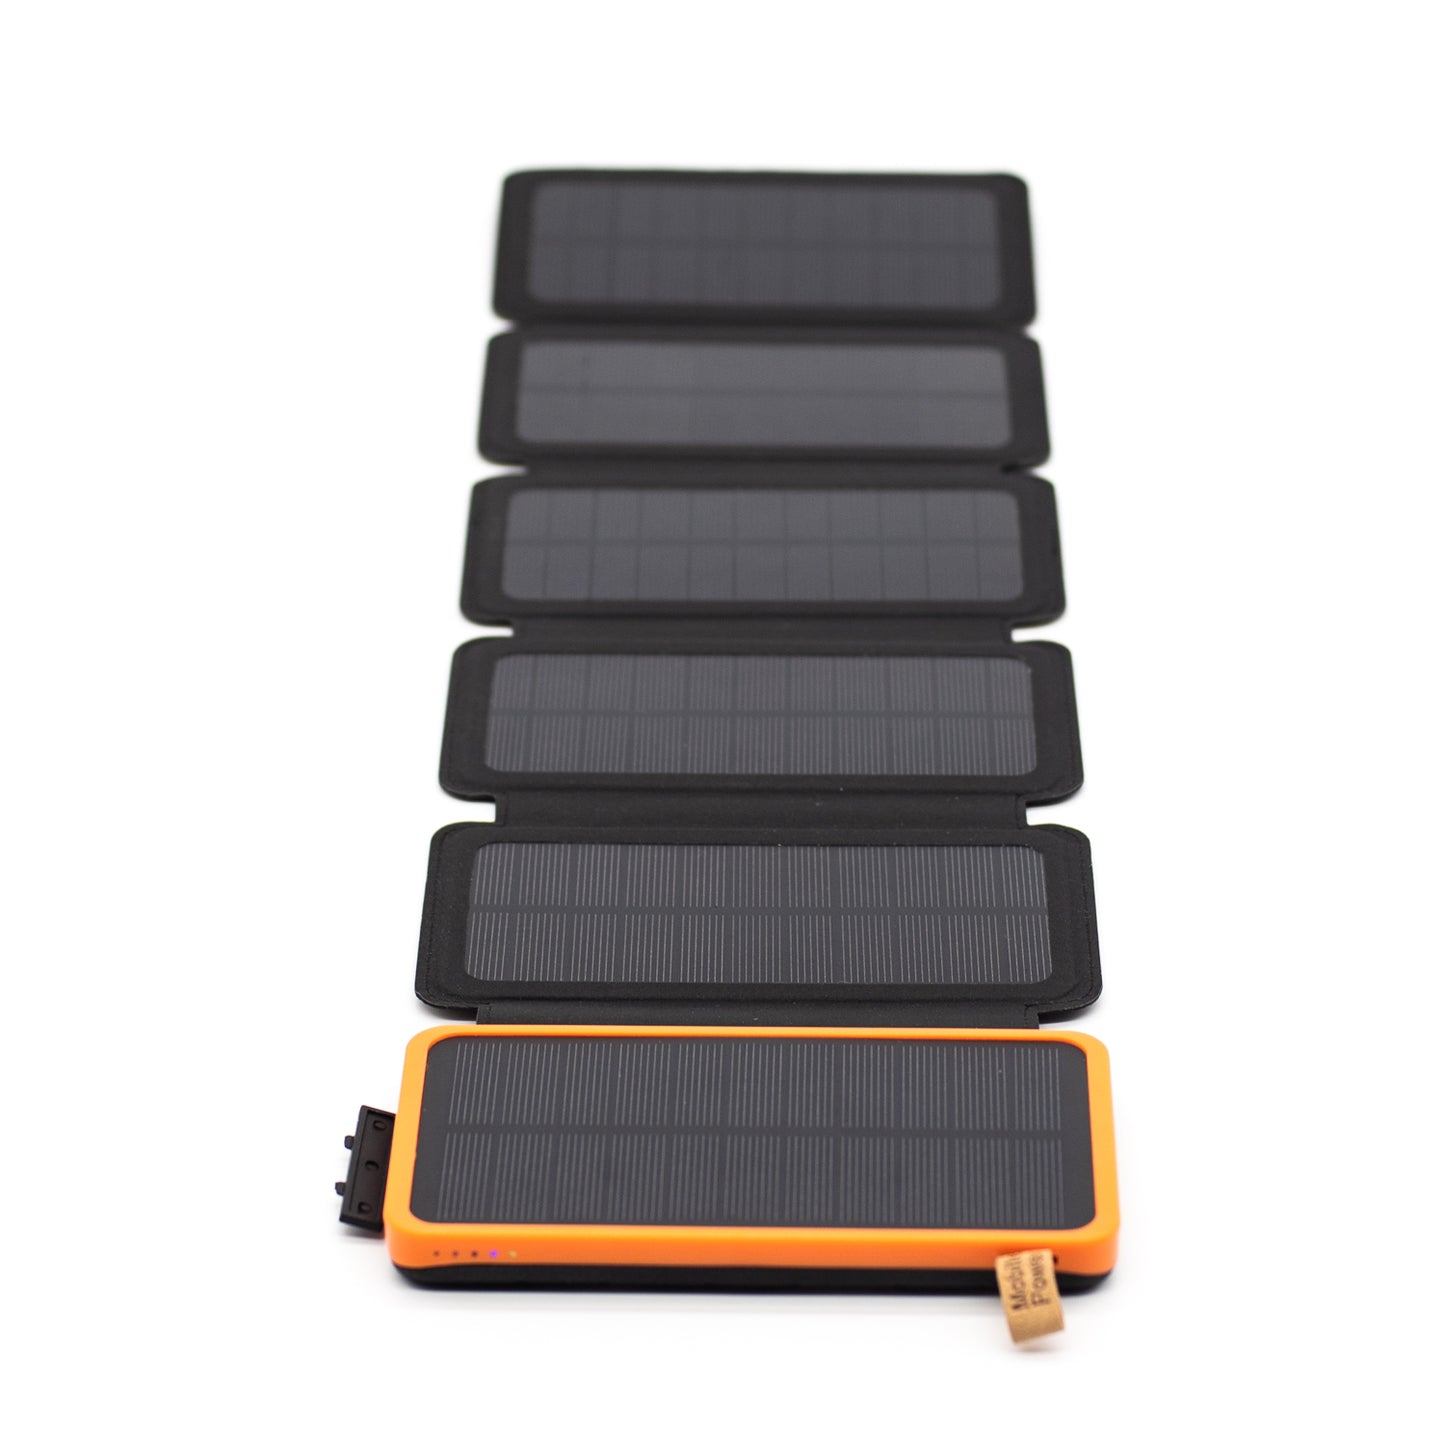 Solar Powerbank Extreme 6 opvouwbare panelen - testwinnaar met 25000mAh